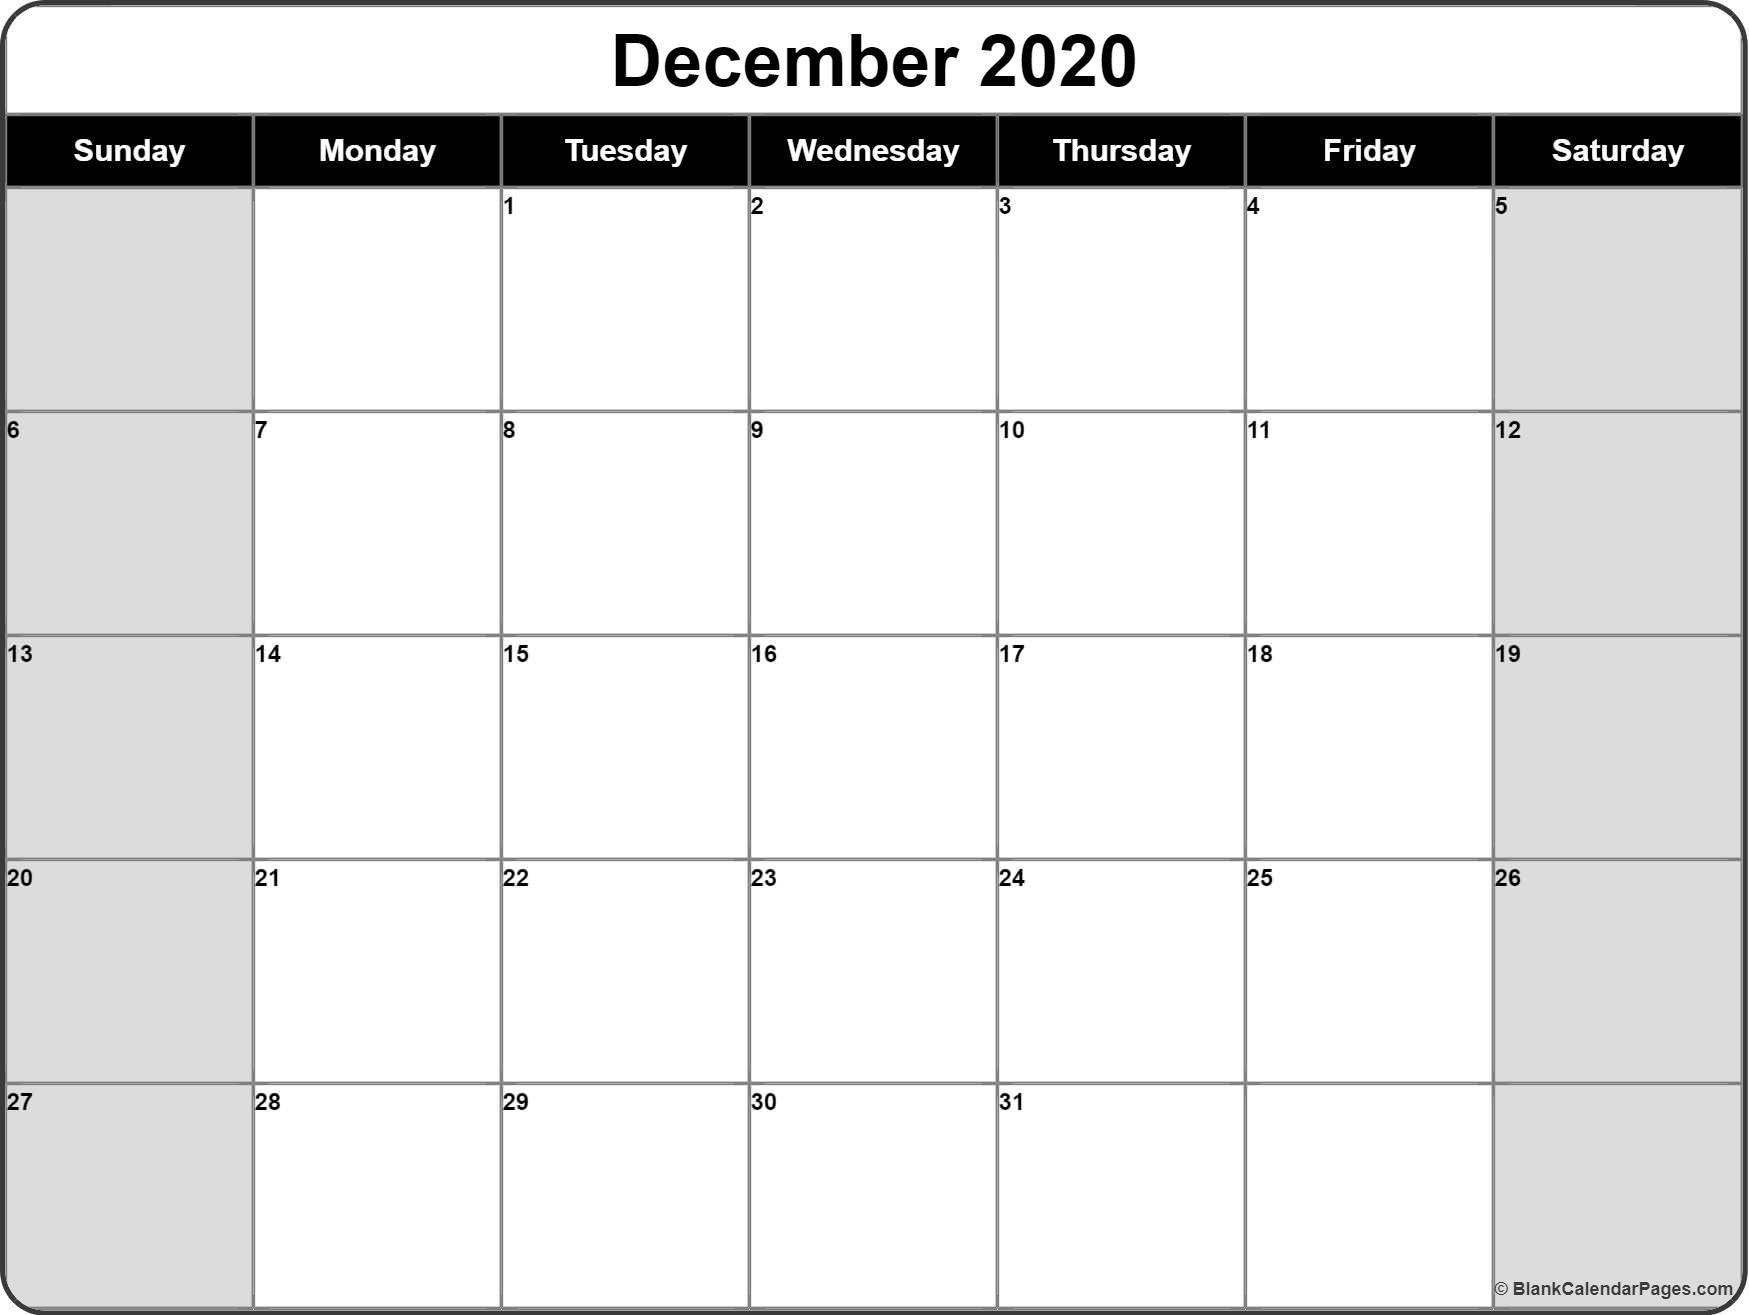 December 2020 calendar